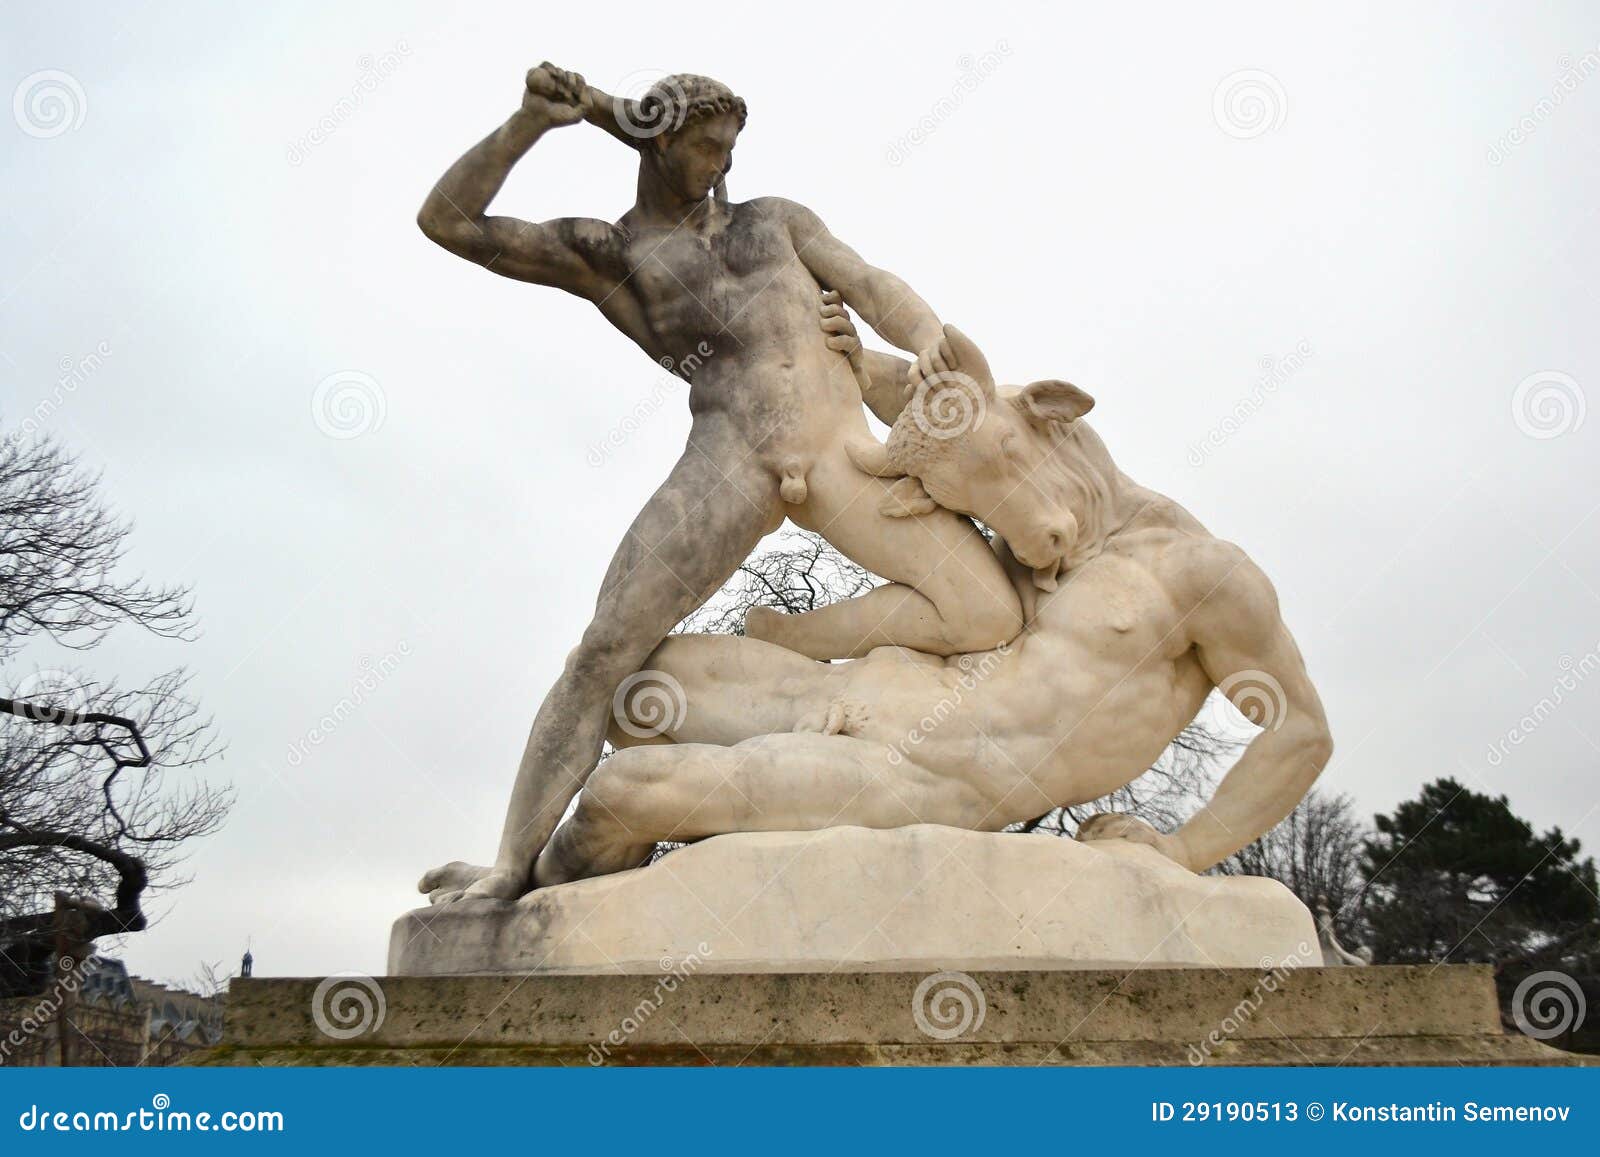 Hercules and Minotaur statue in Tuileries garden, Paris, France